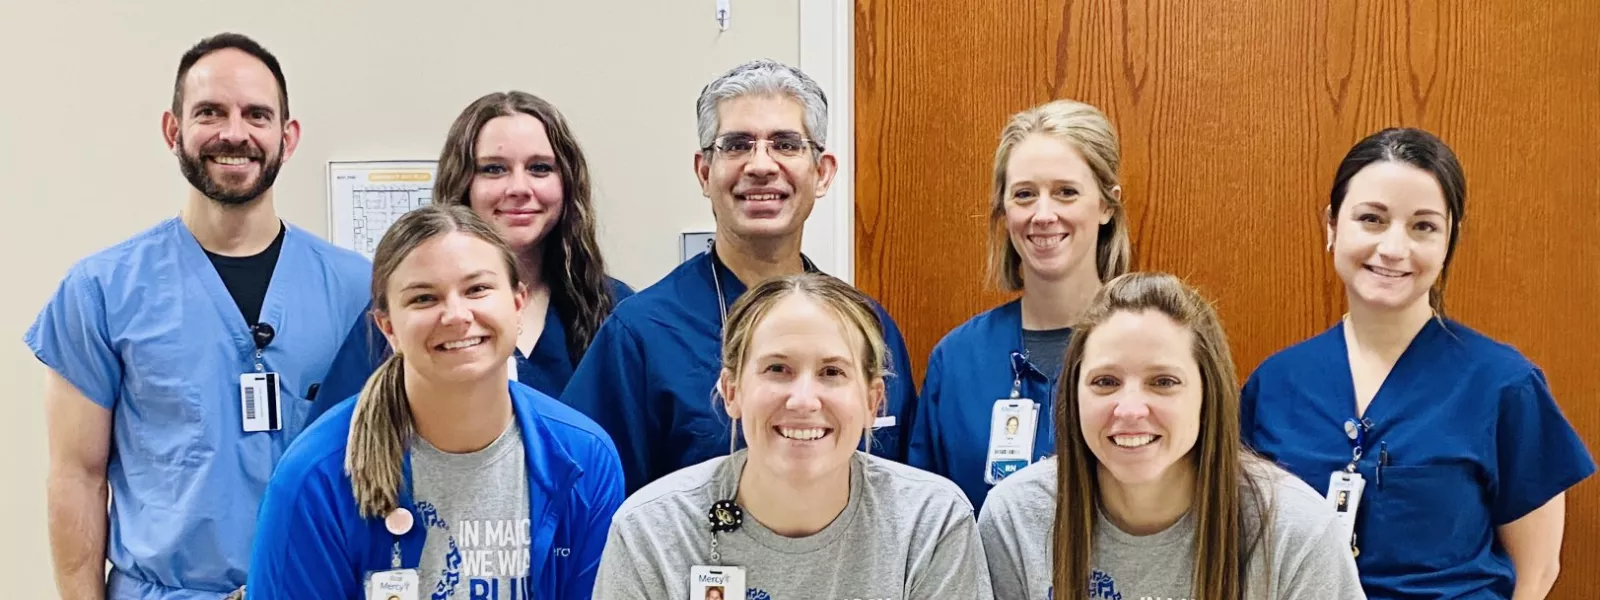 Medical staff dress in blue